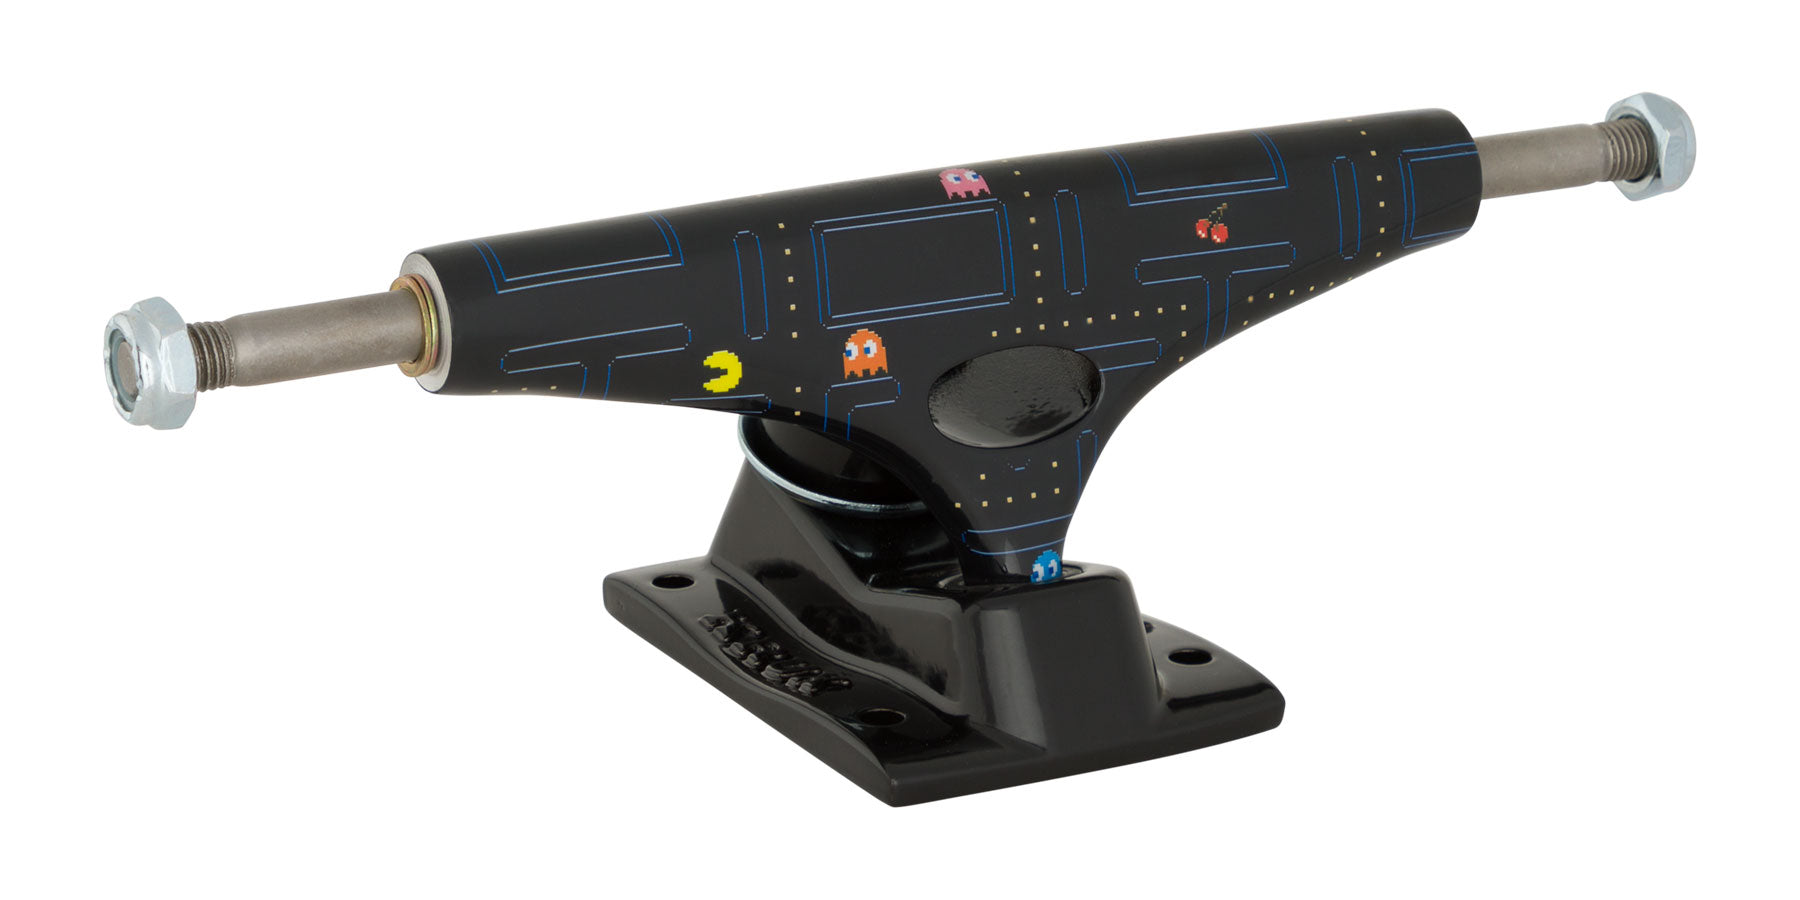 Krux K5 Skateboard Trucks PAC-MAN DLK 8.0" - Invisible Board Shop